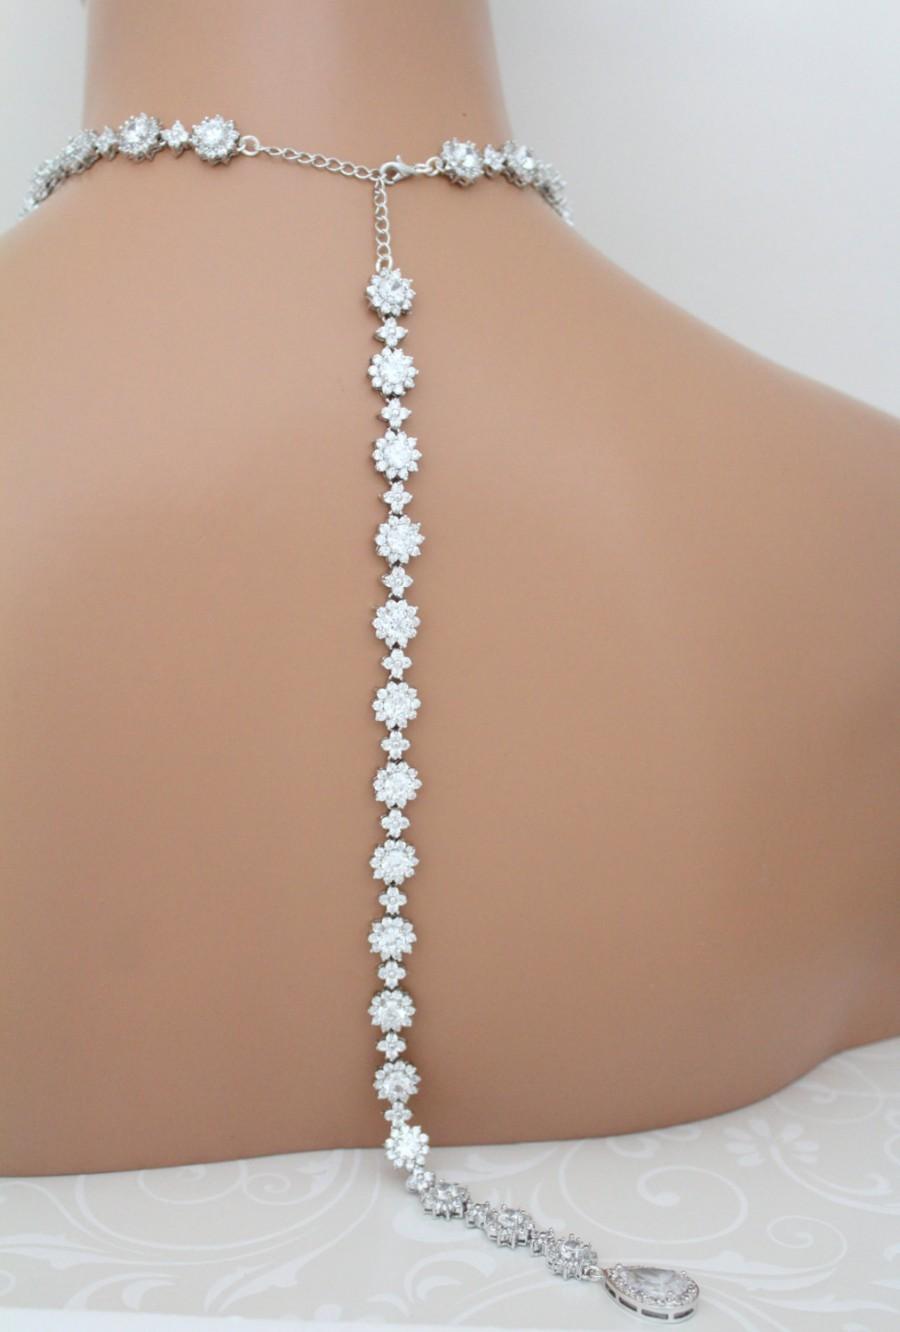 Hochzeit - Bridal Backdrop necklace, Crystal Wedding necklace, Long Backdrop necklace, Statement necklace, Rhinestone necklace, CZ necklace, Halo